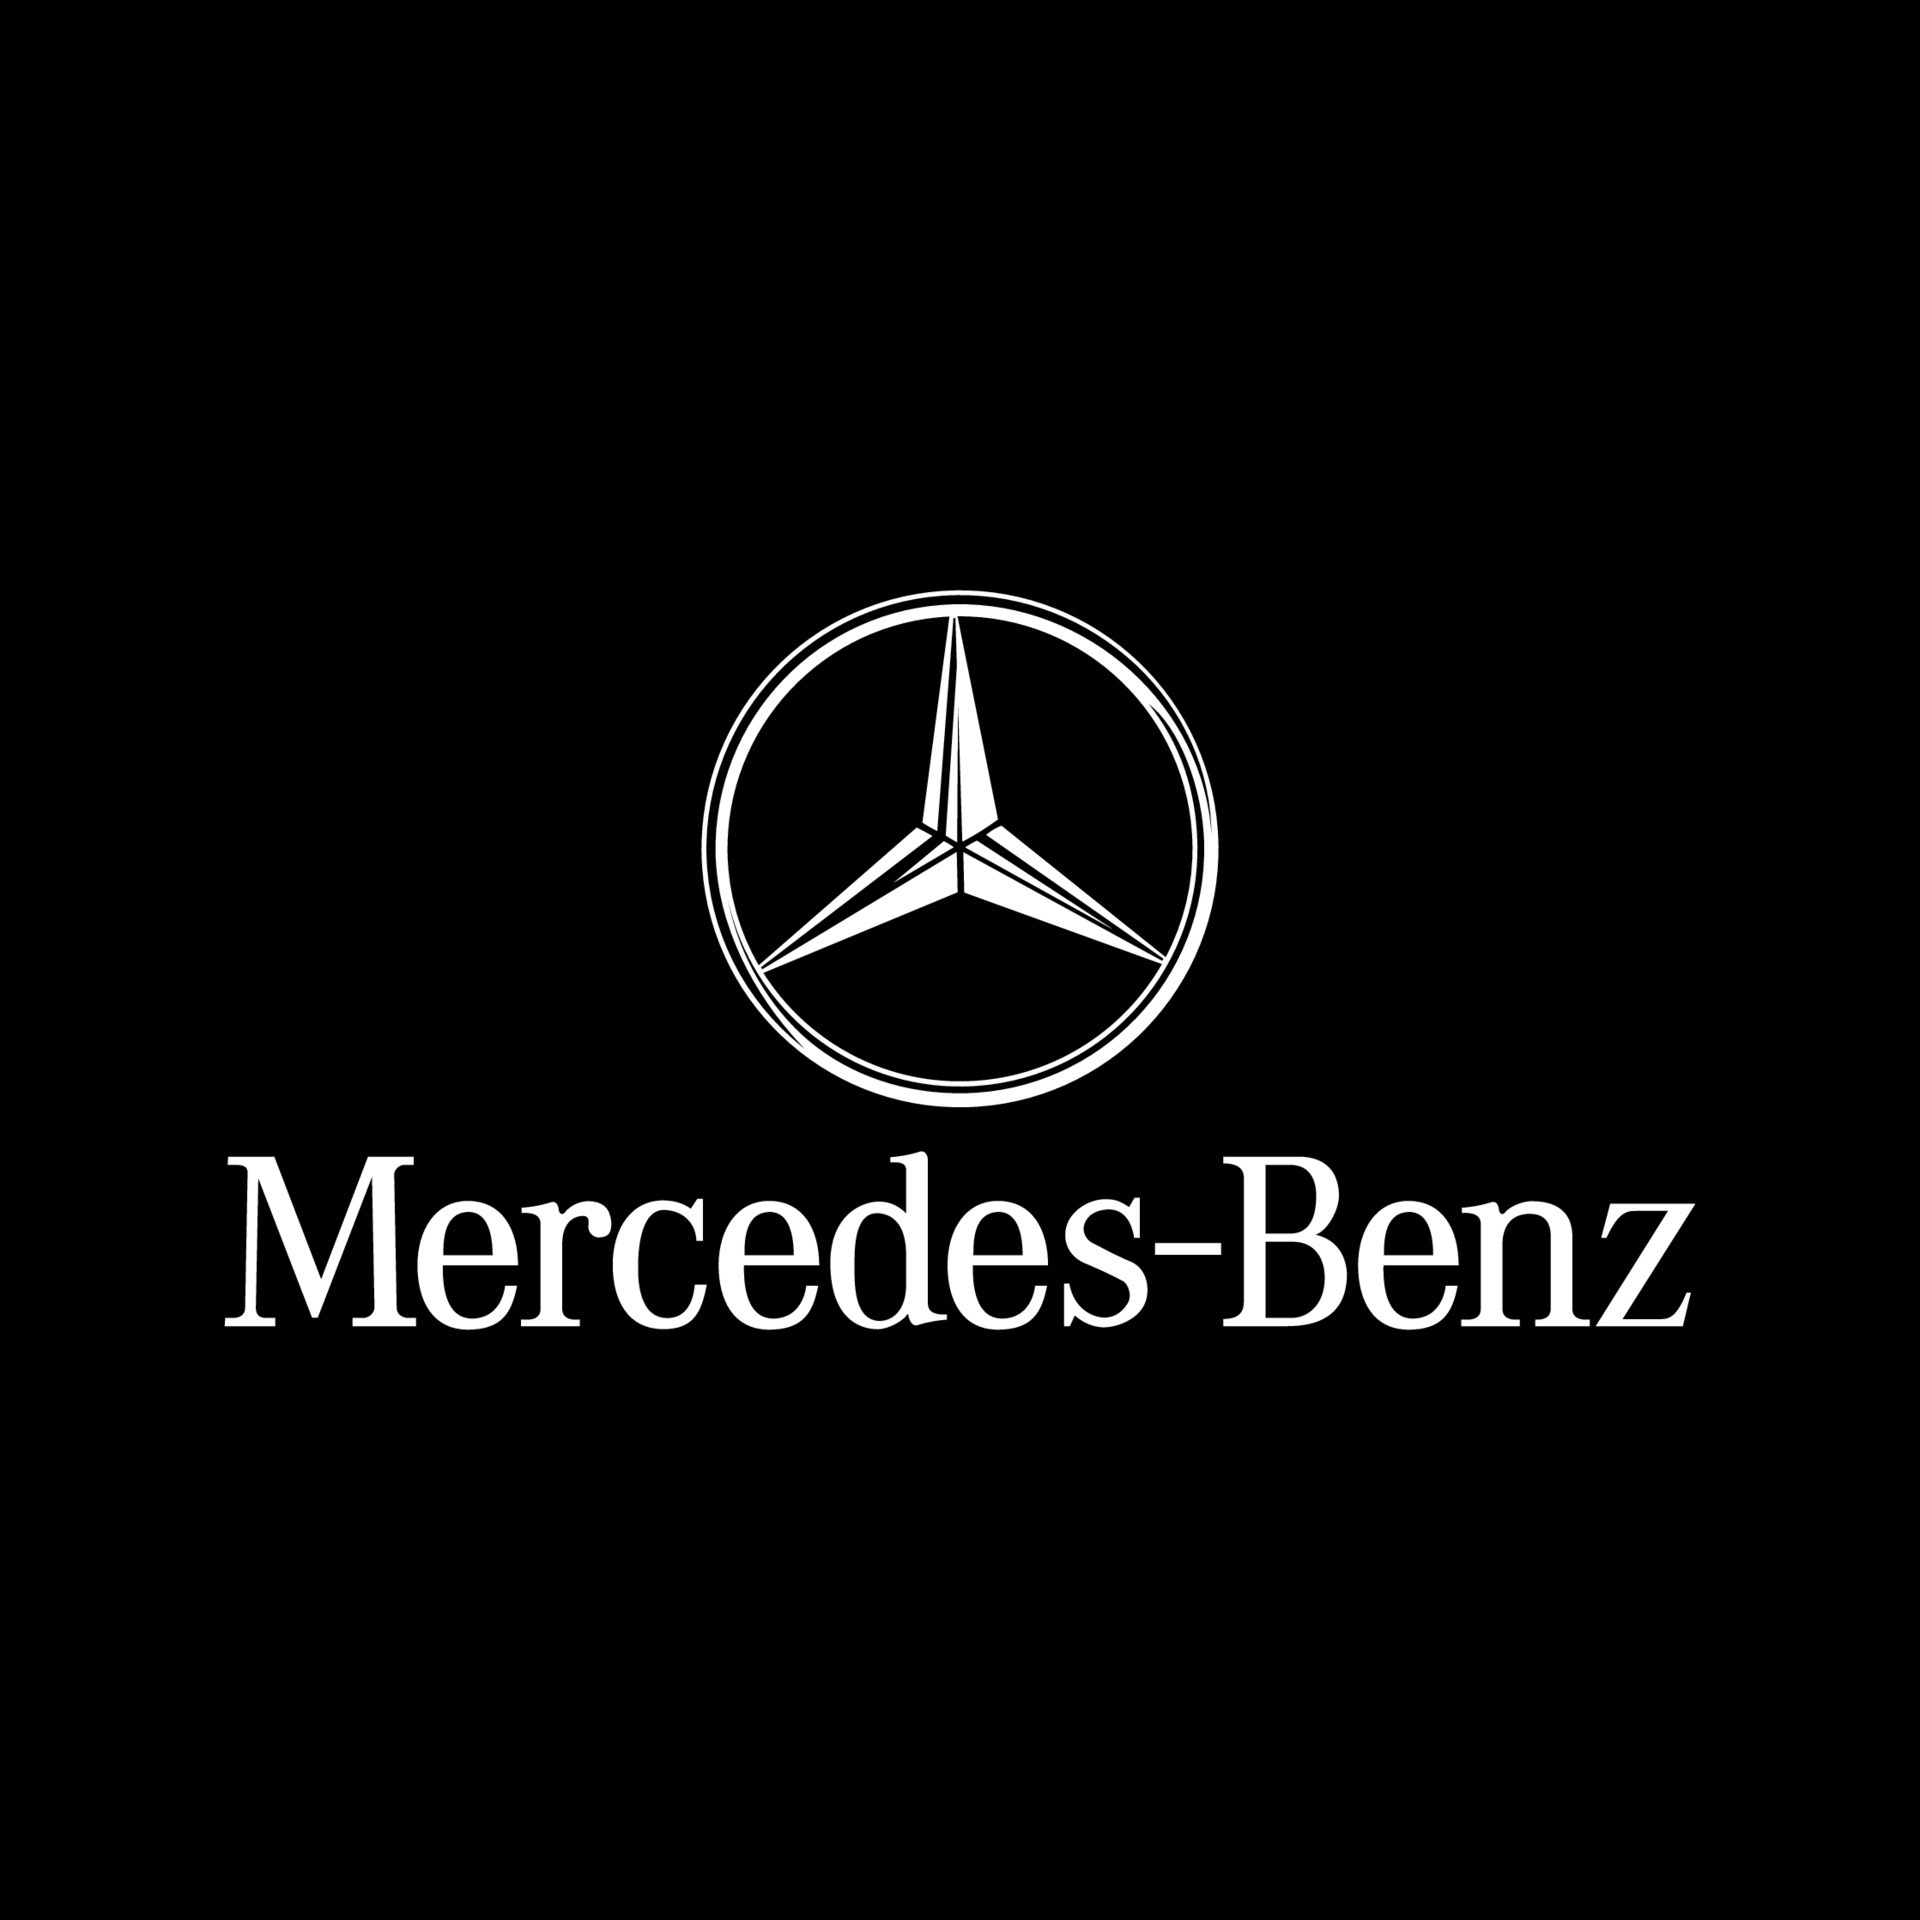 Mercedes benz brand logo symbol with name black Vector Image